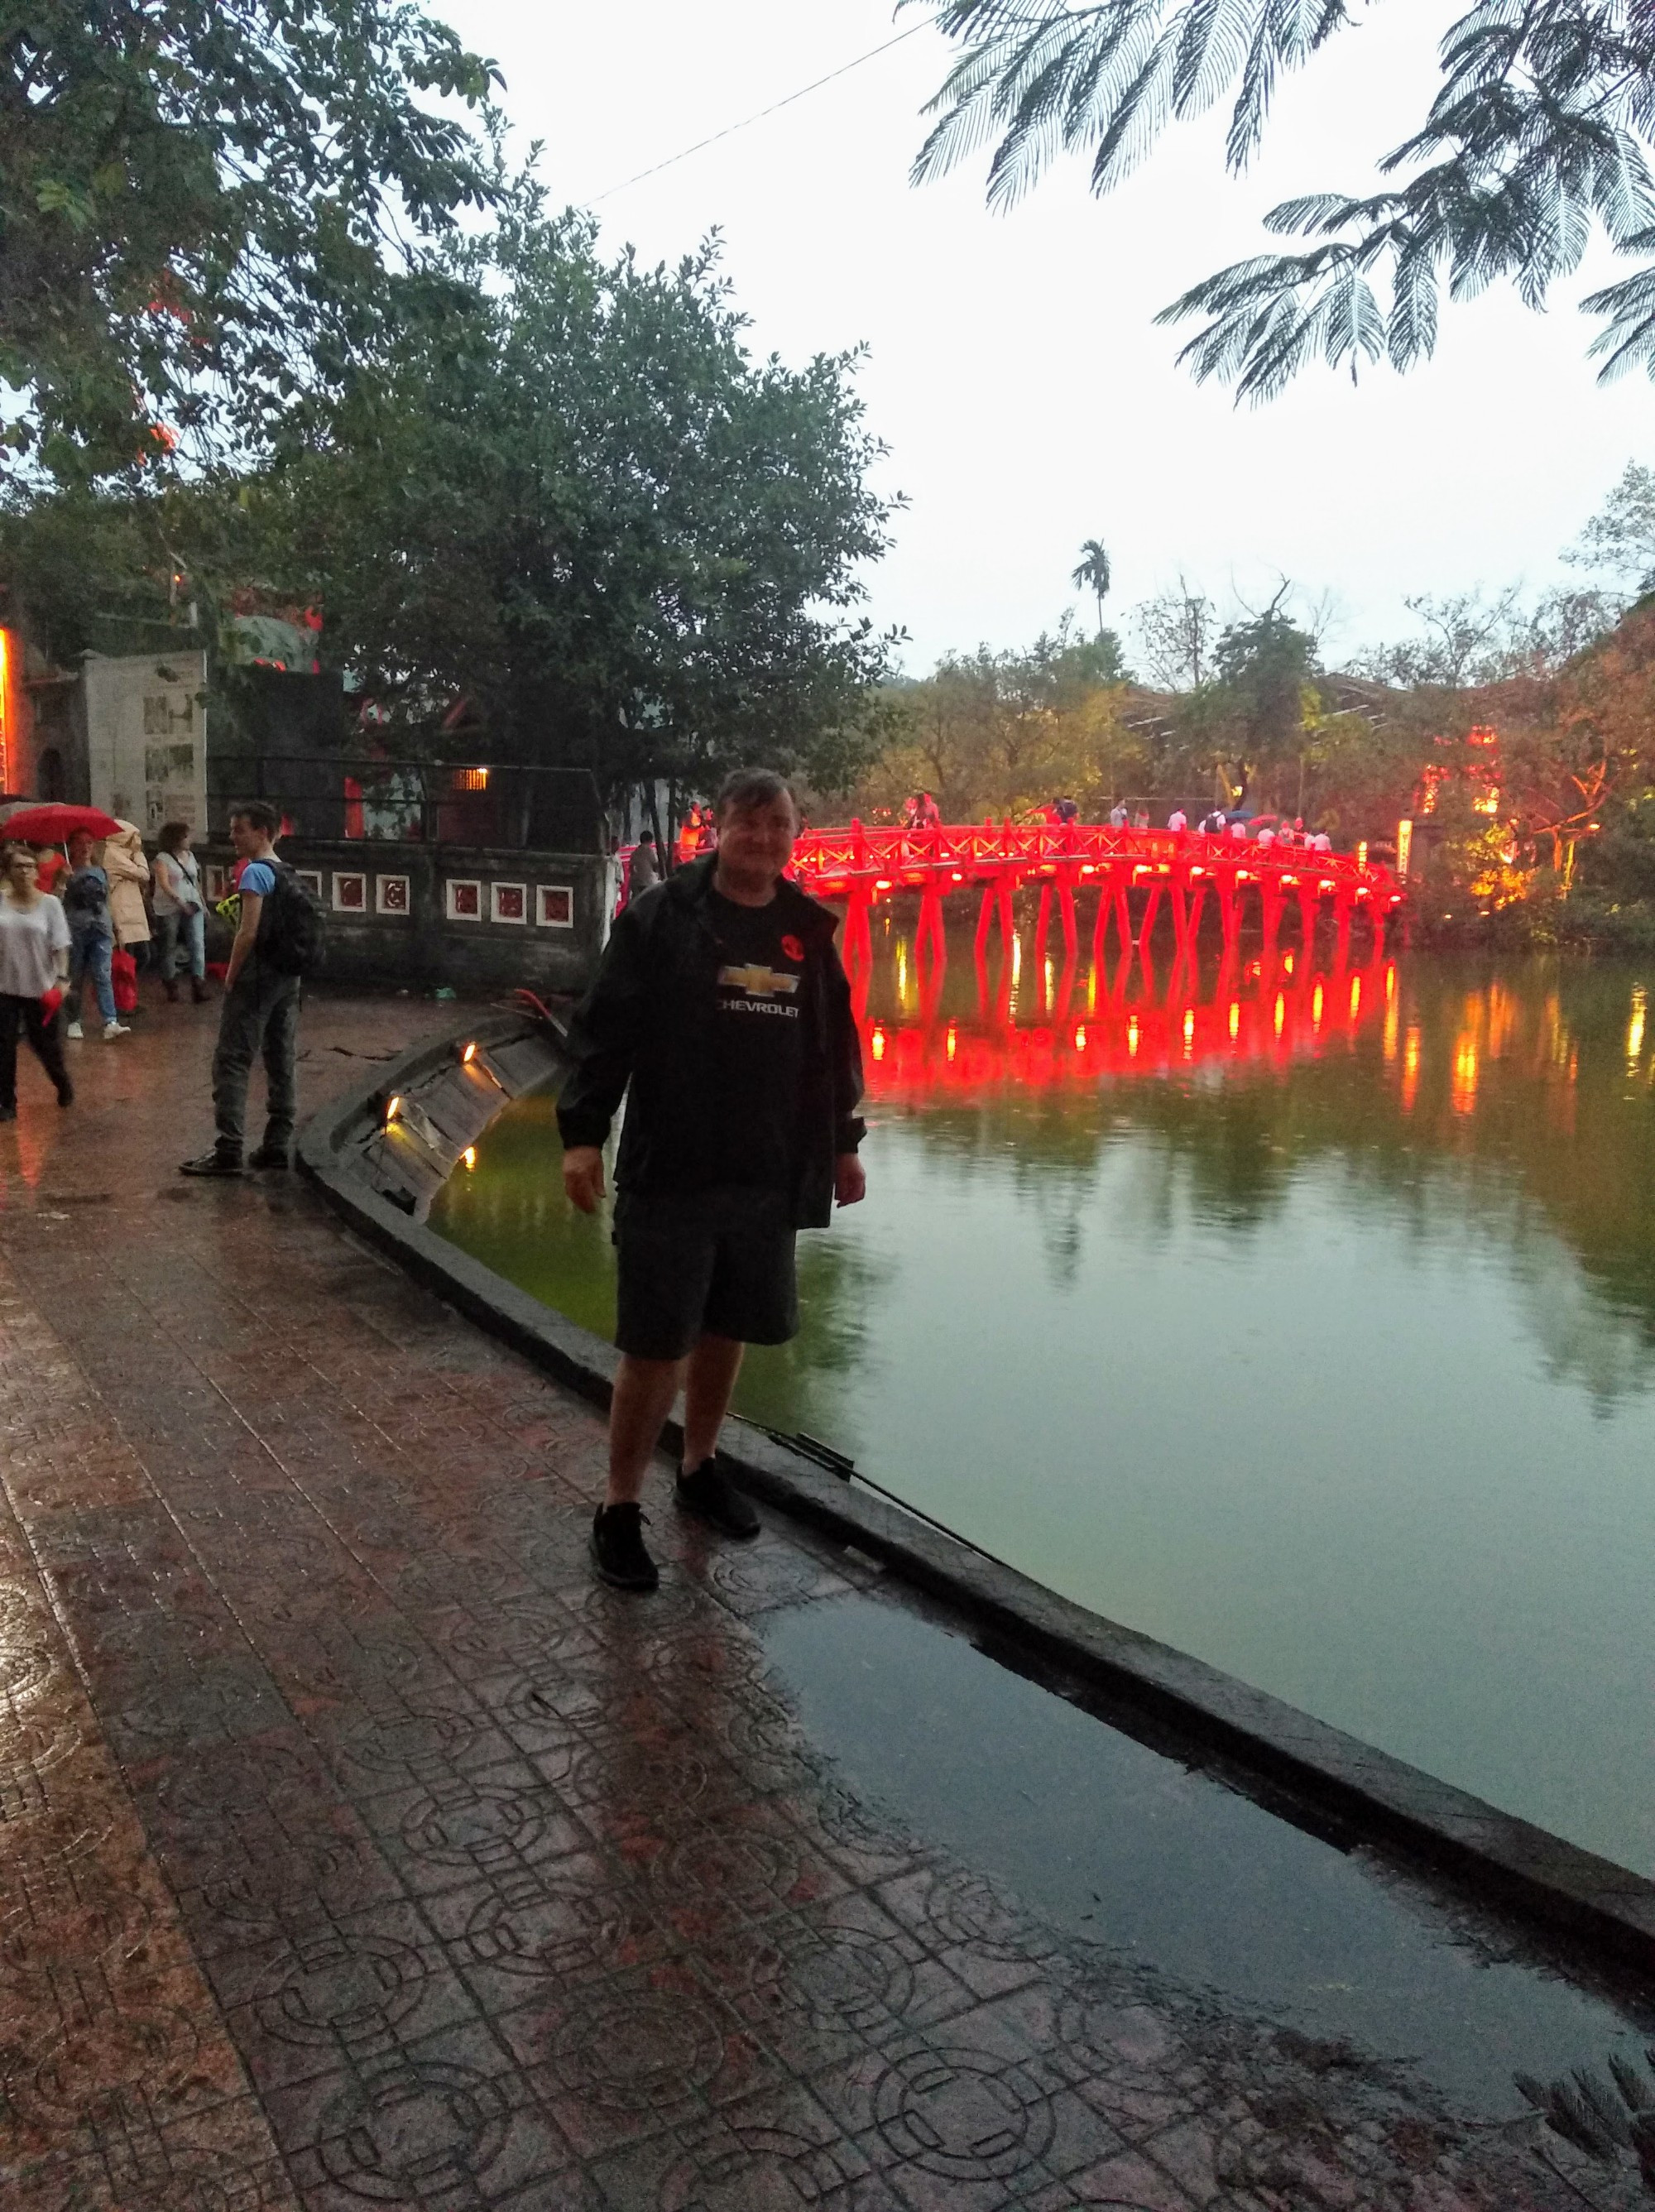 Red Bridge at Joan Kiem Lake, Hanoi Vietnam 